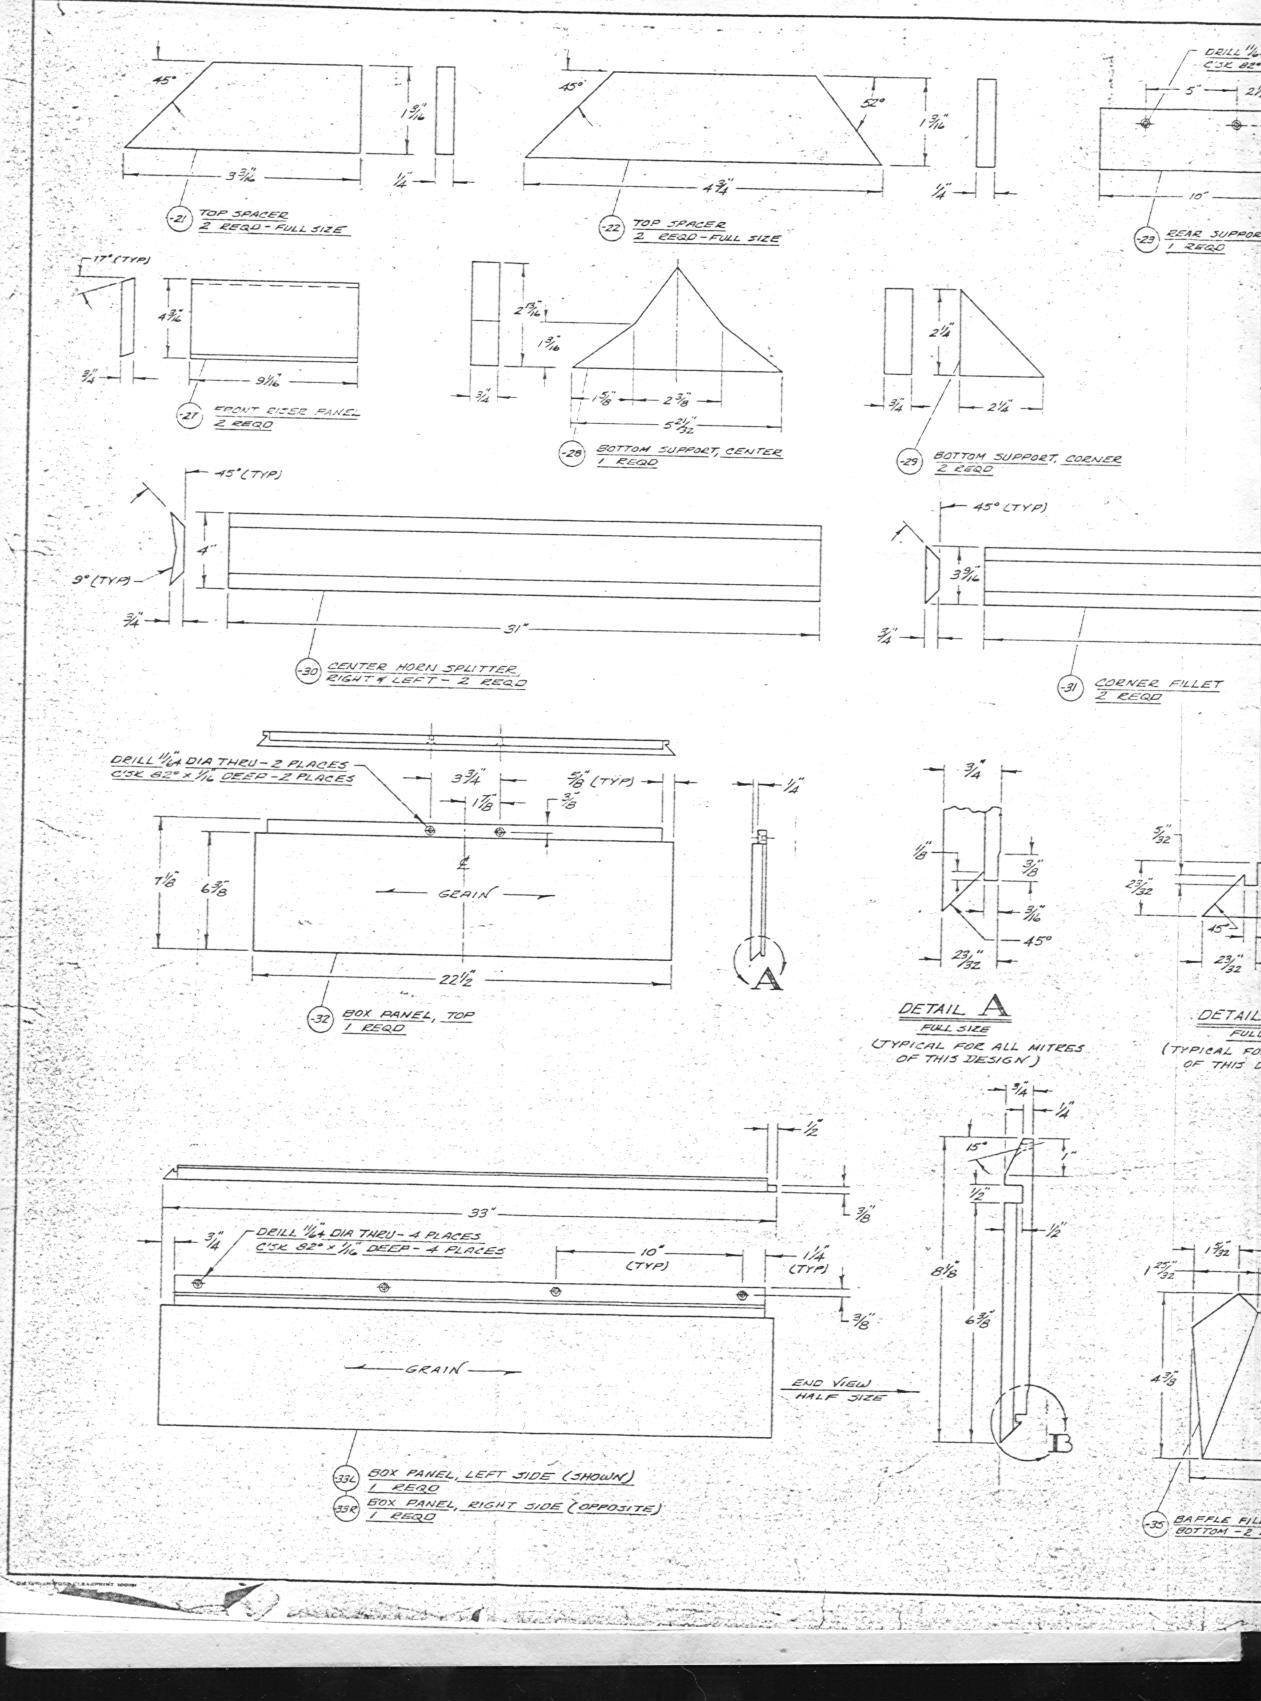 JBL - Hartsfield Cabinet - Drawing 8a